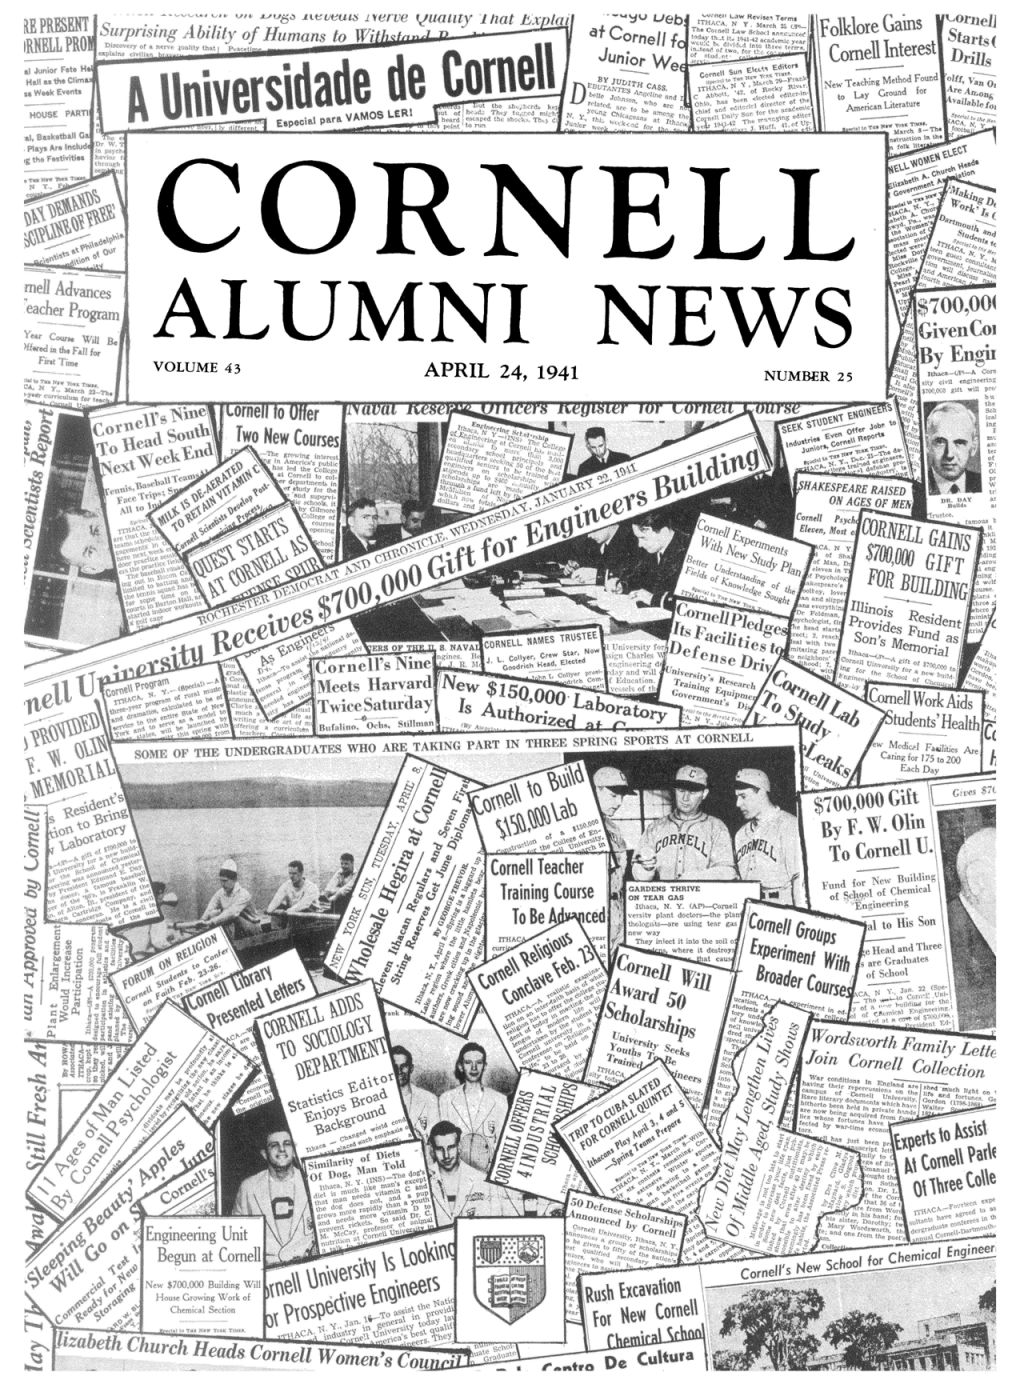 Alumni News Volume 43